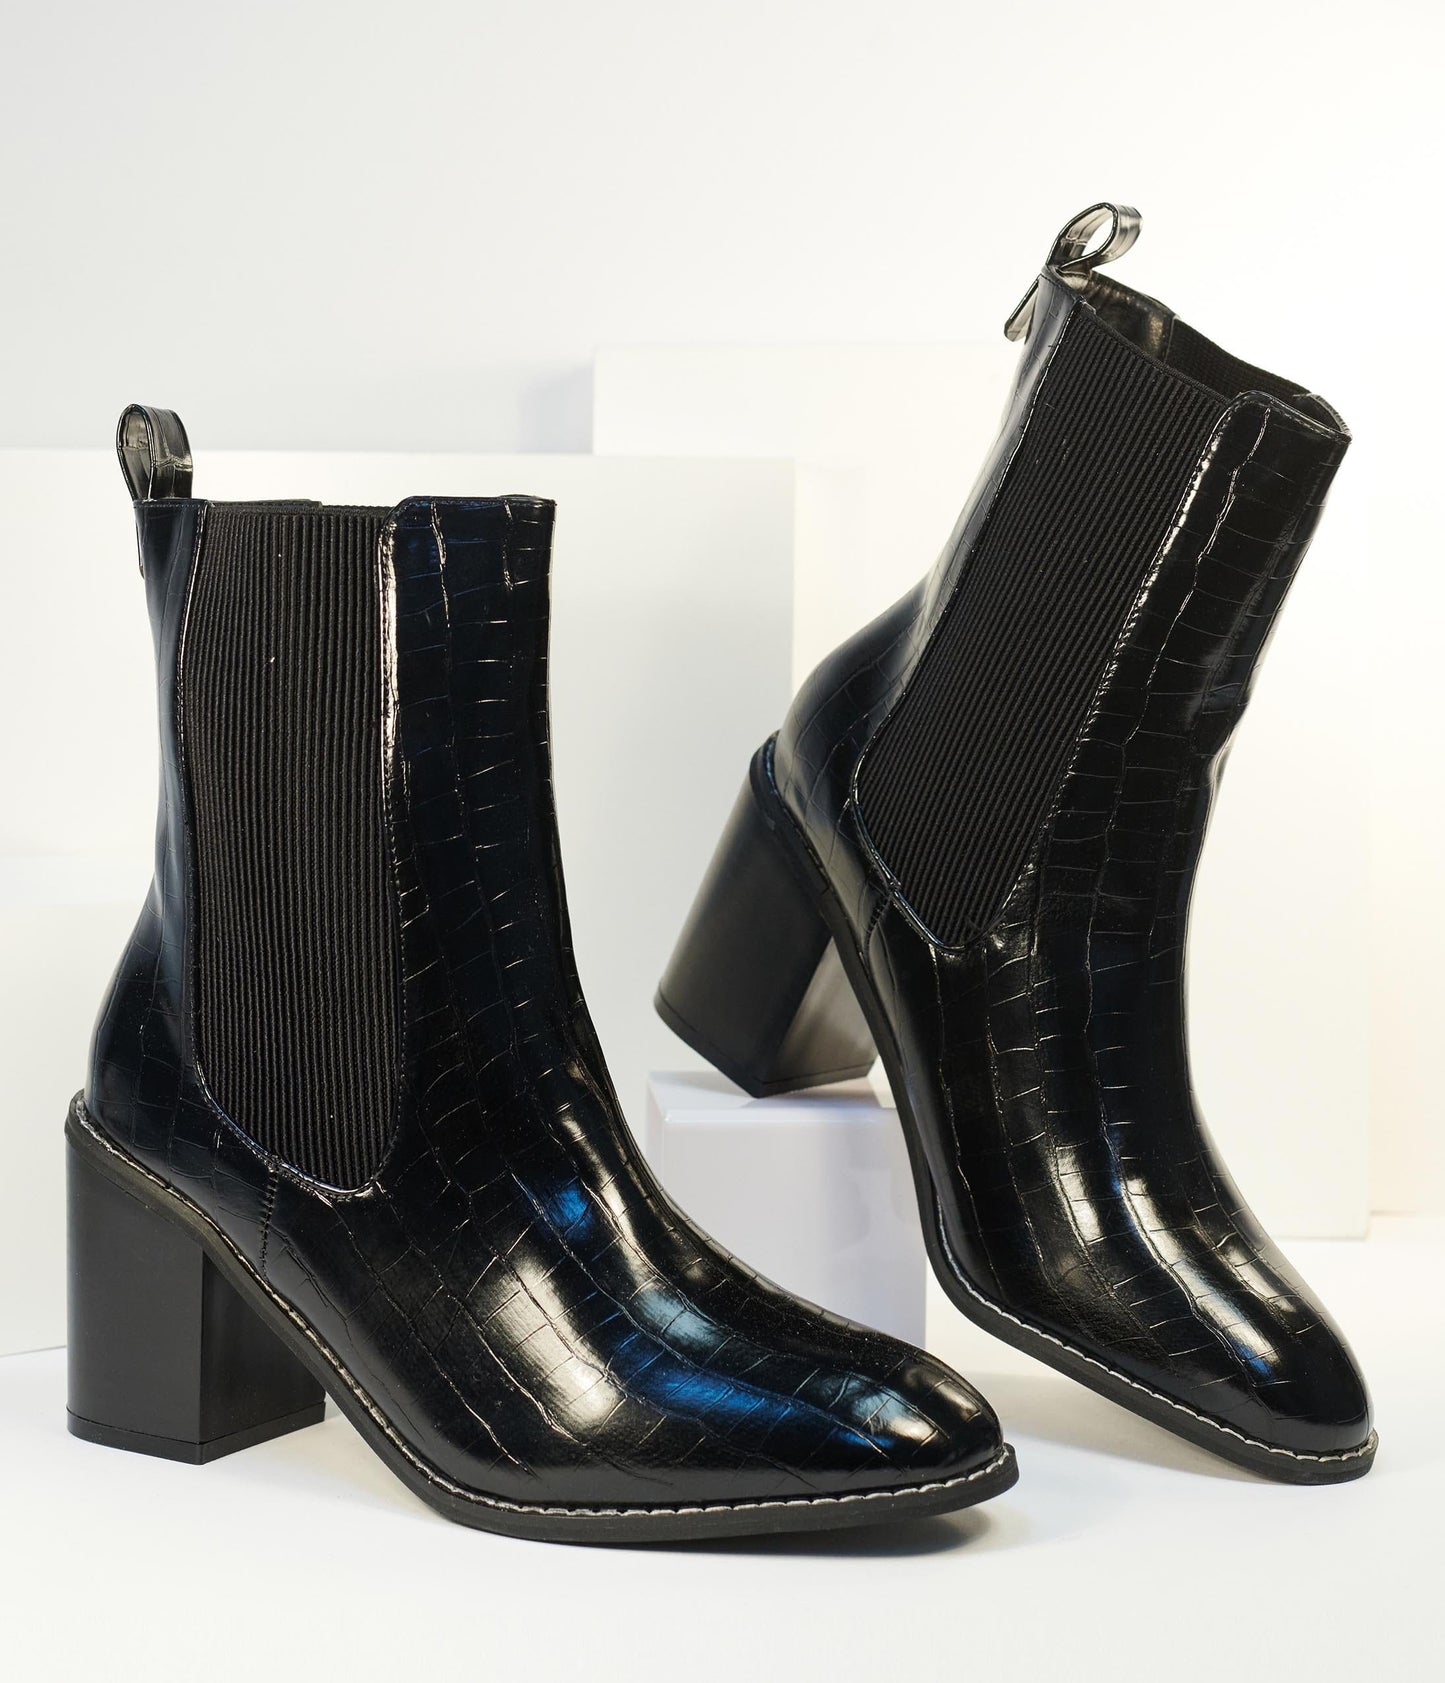 1990s Black Reptile Patent Leatherette Heel Booties